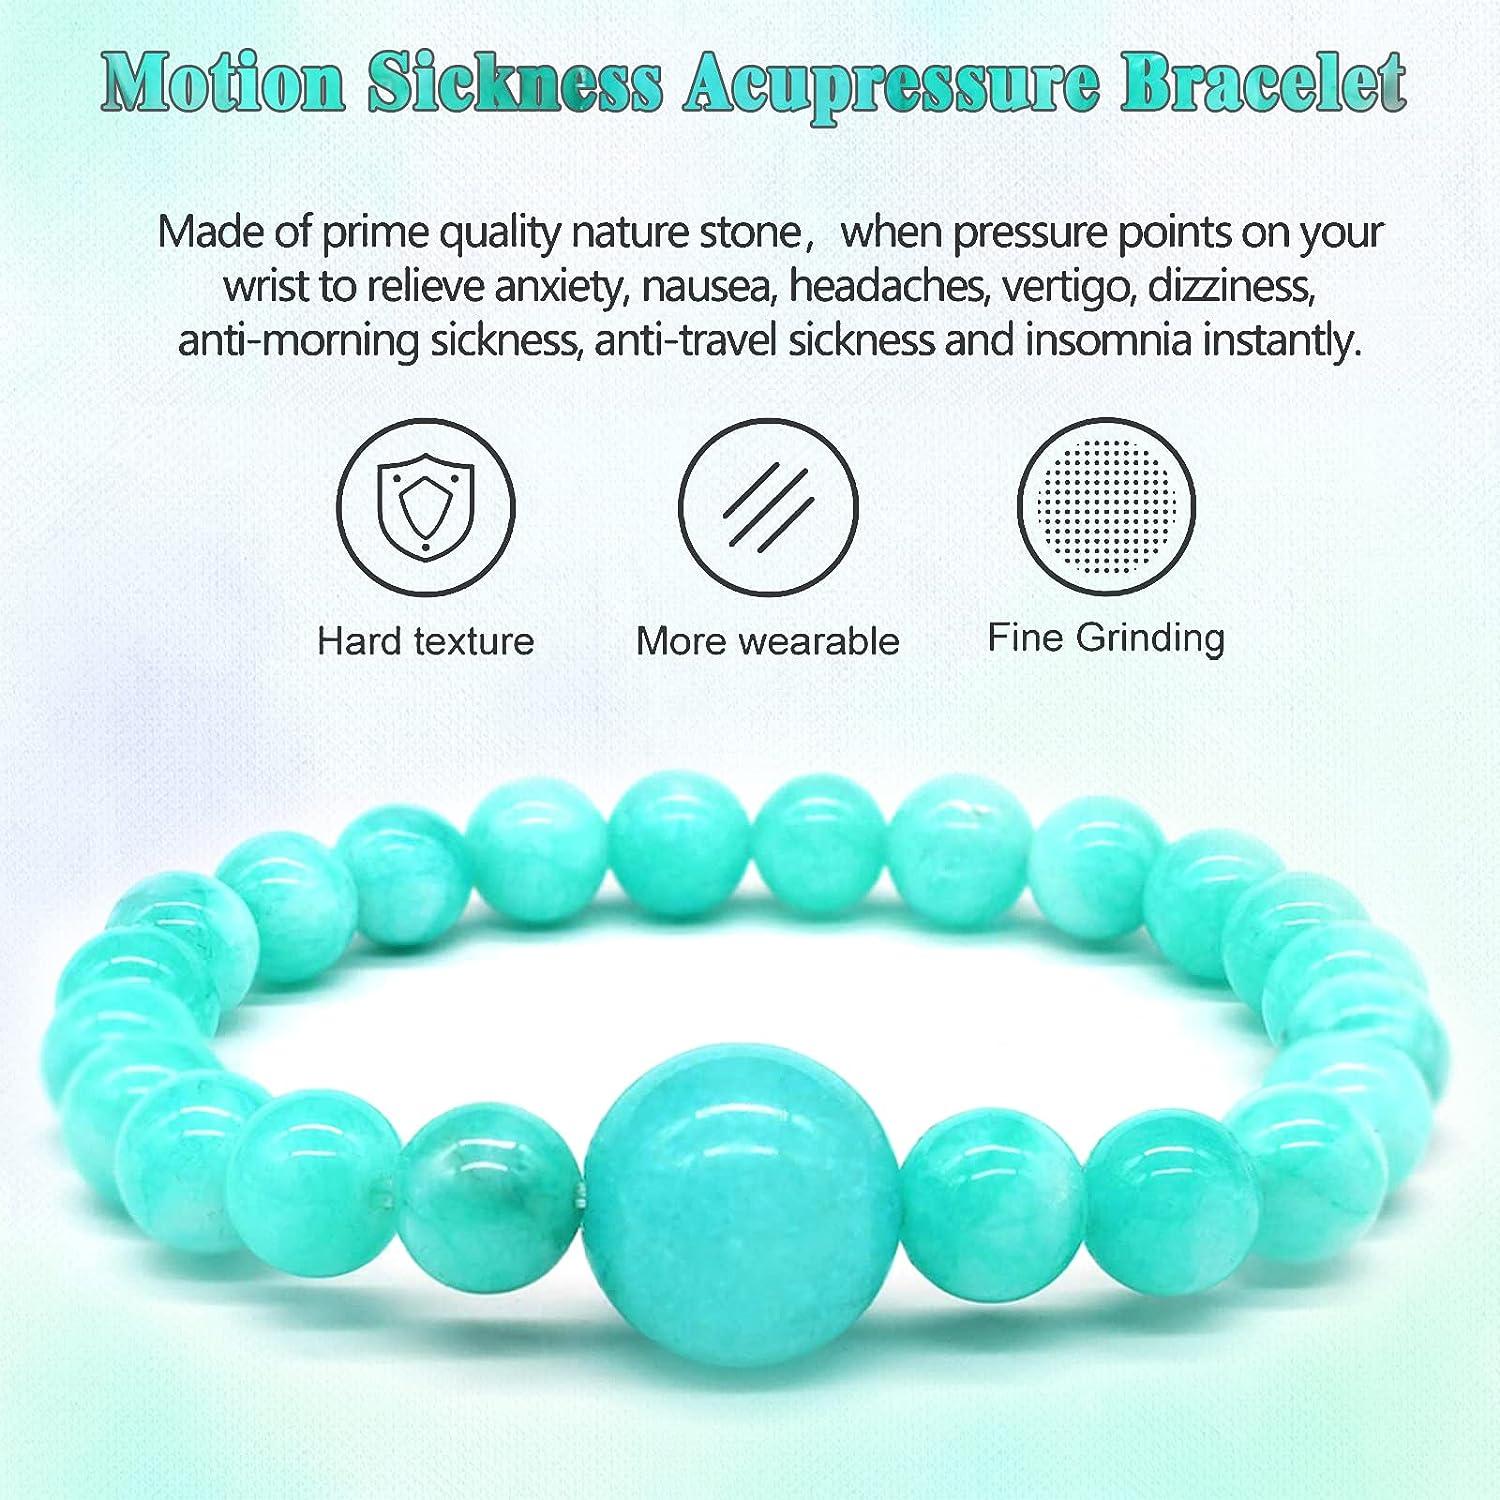 Snap Charm Anxiety Relief Multi Symptom Acupressure Bracelet-Sleep  Aid-Menopause | eBay